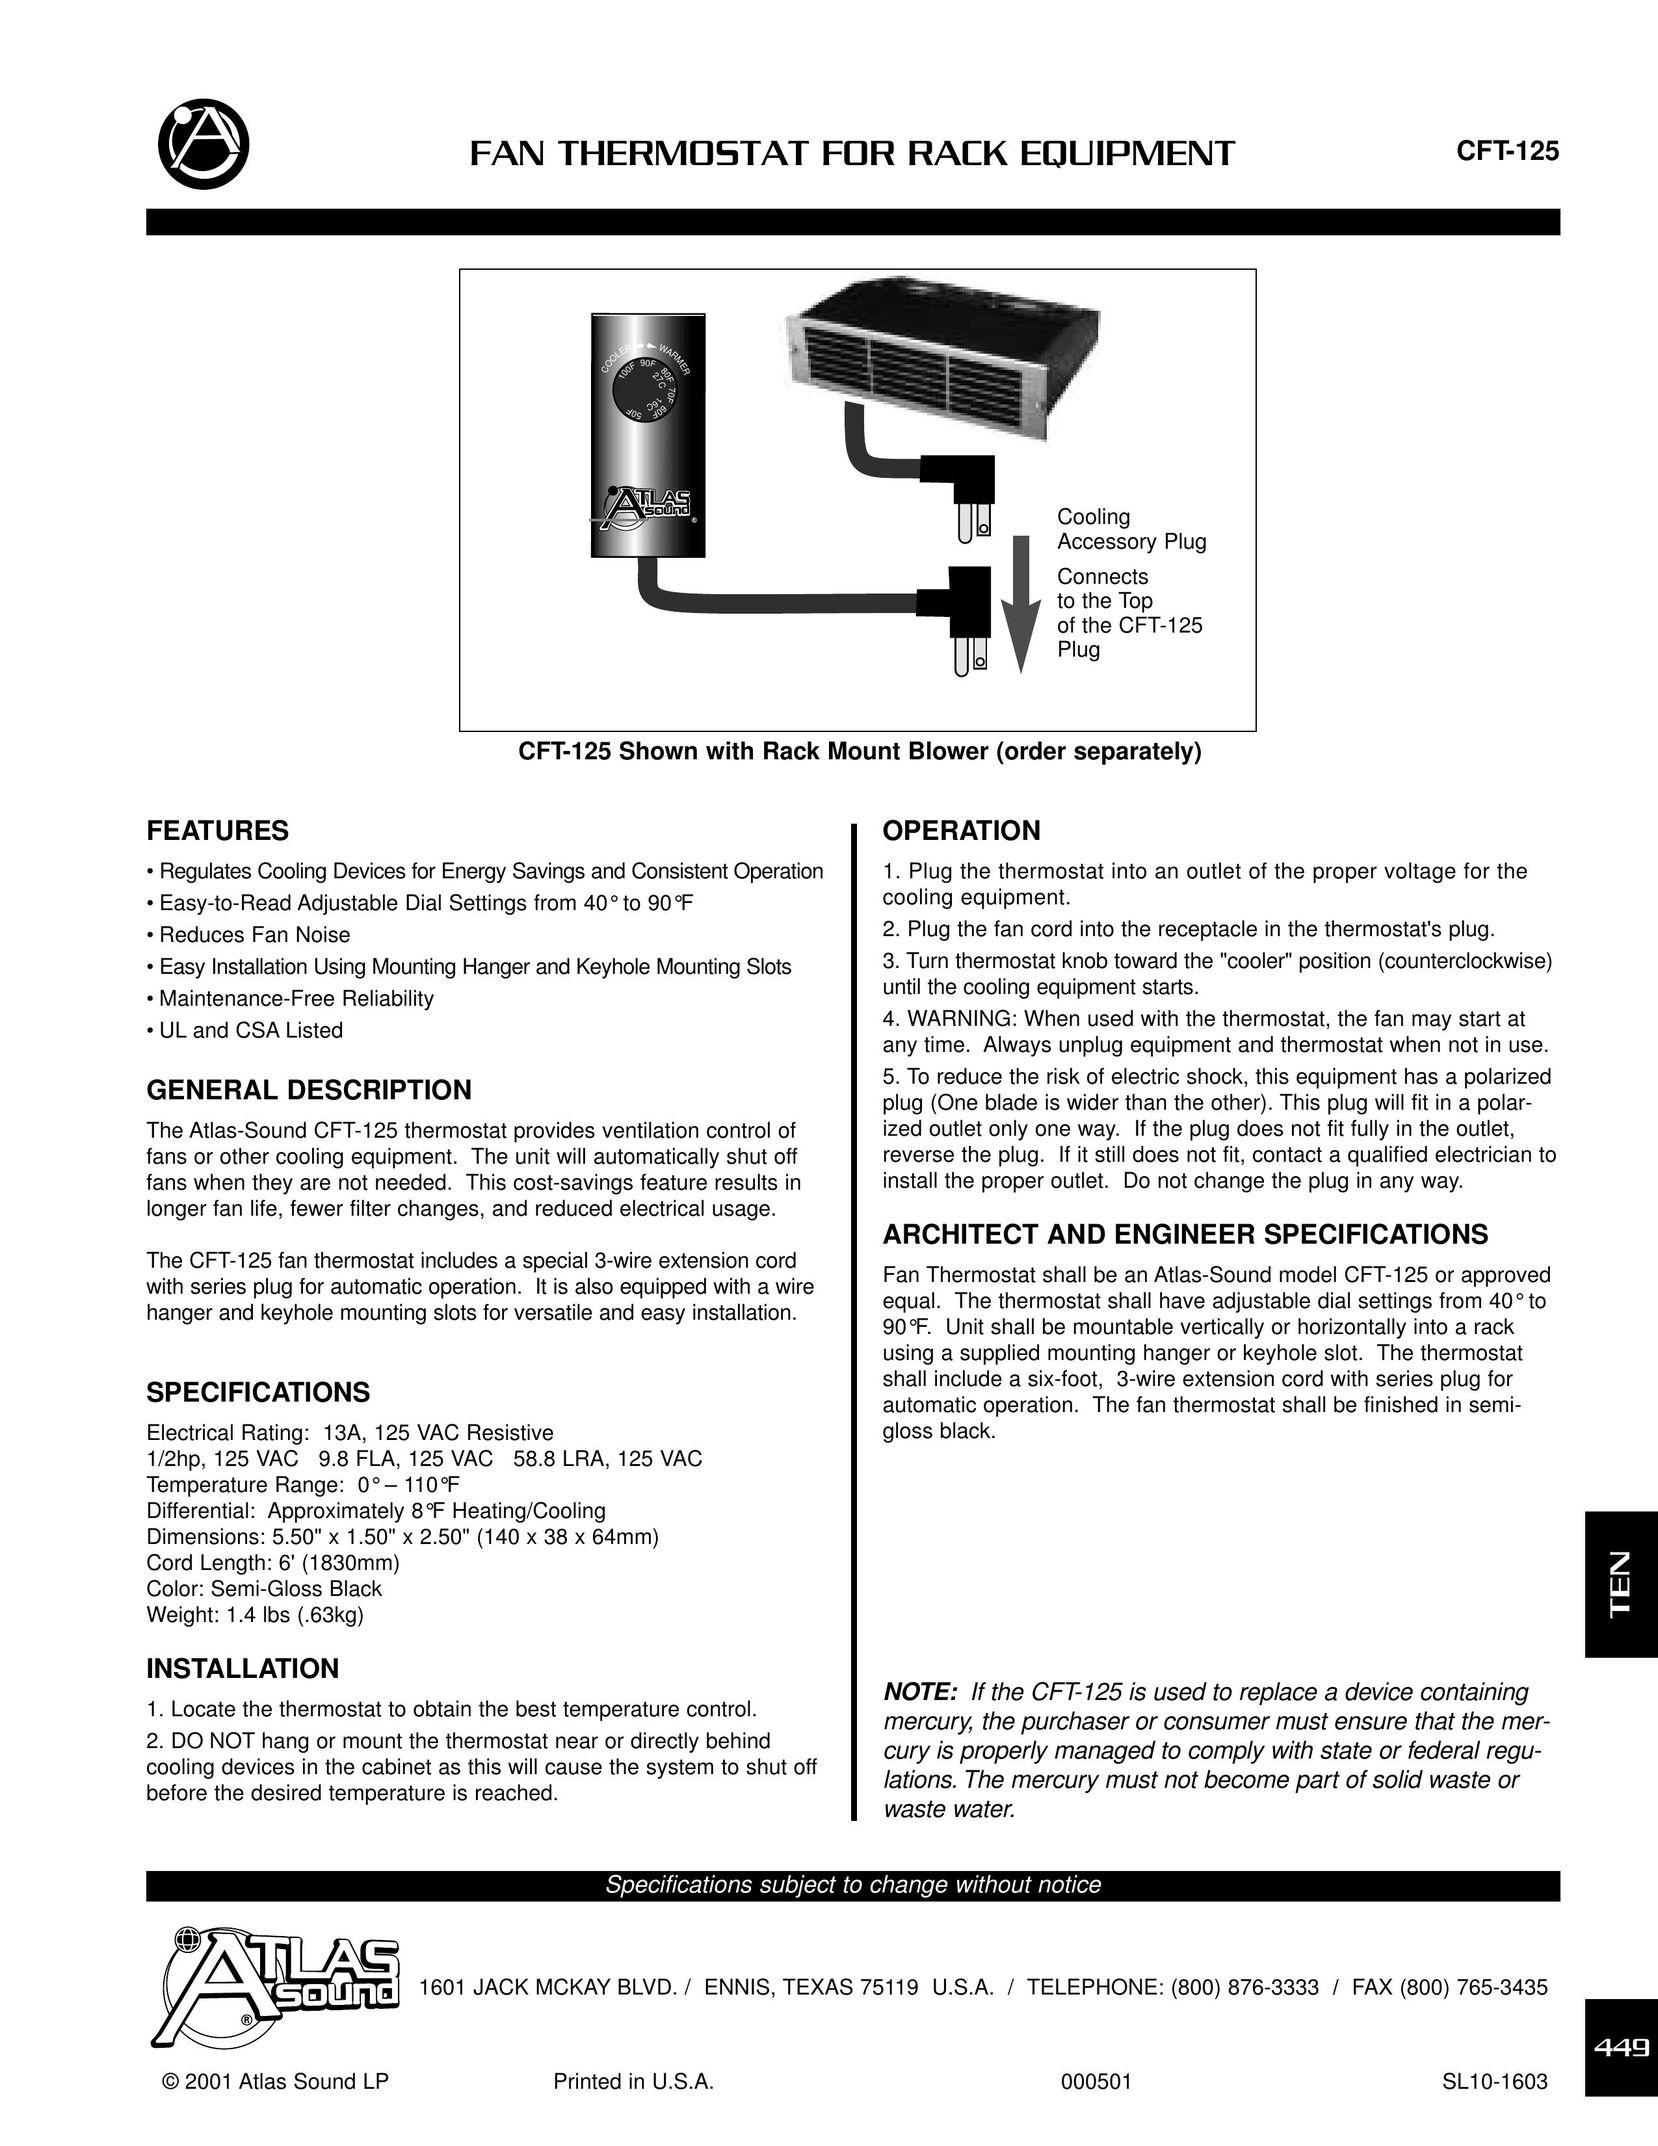 Atlas Sound CFT-125 Thermostat User Manual